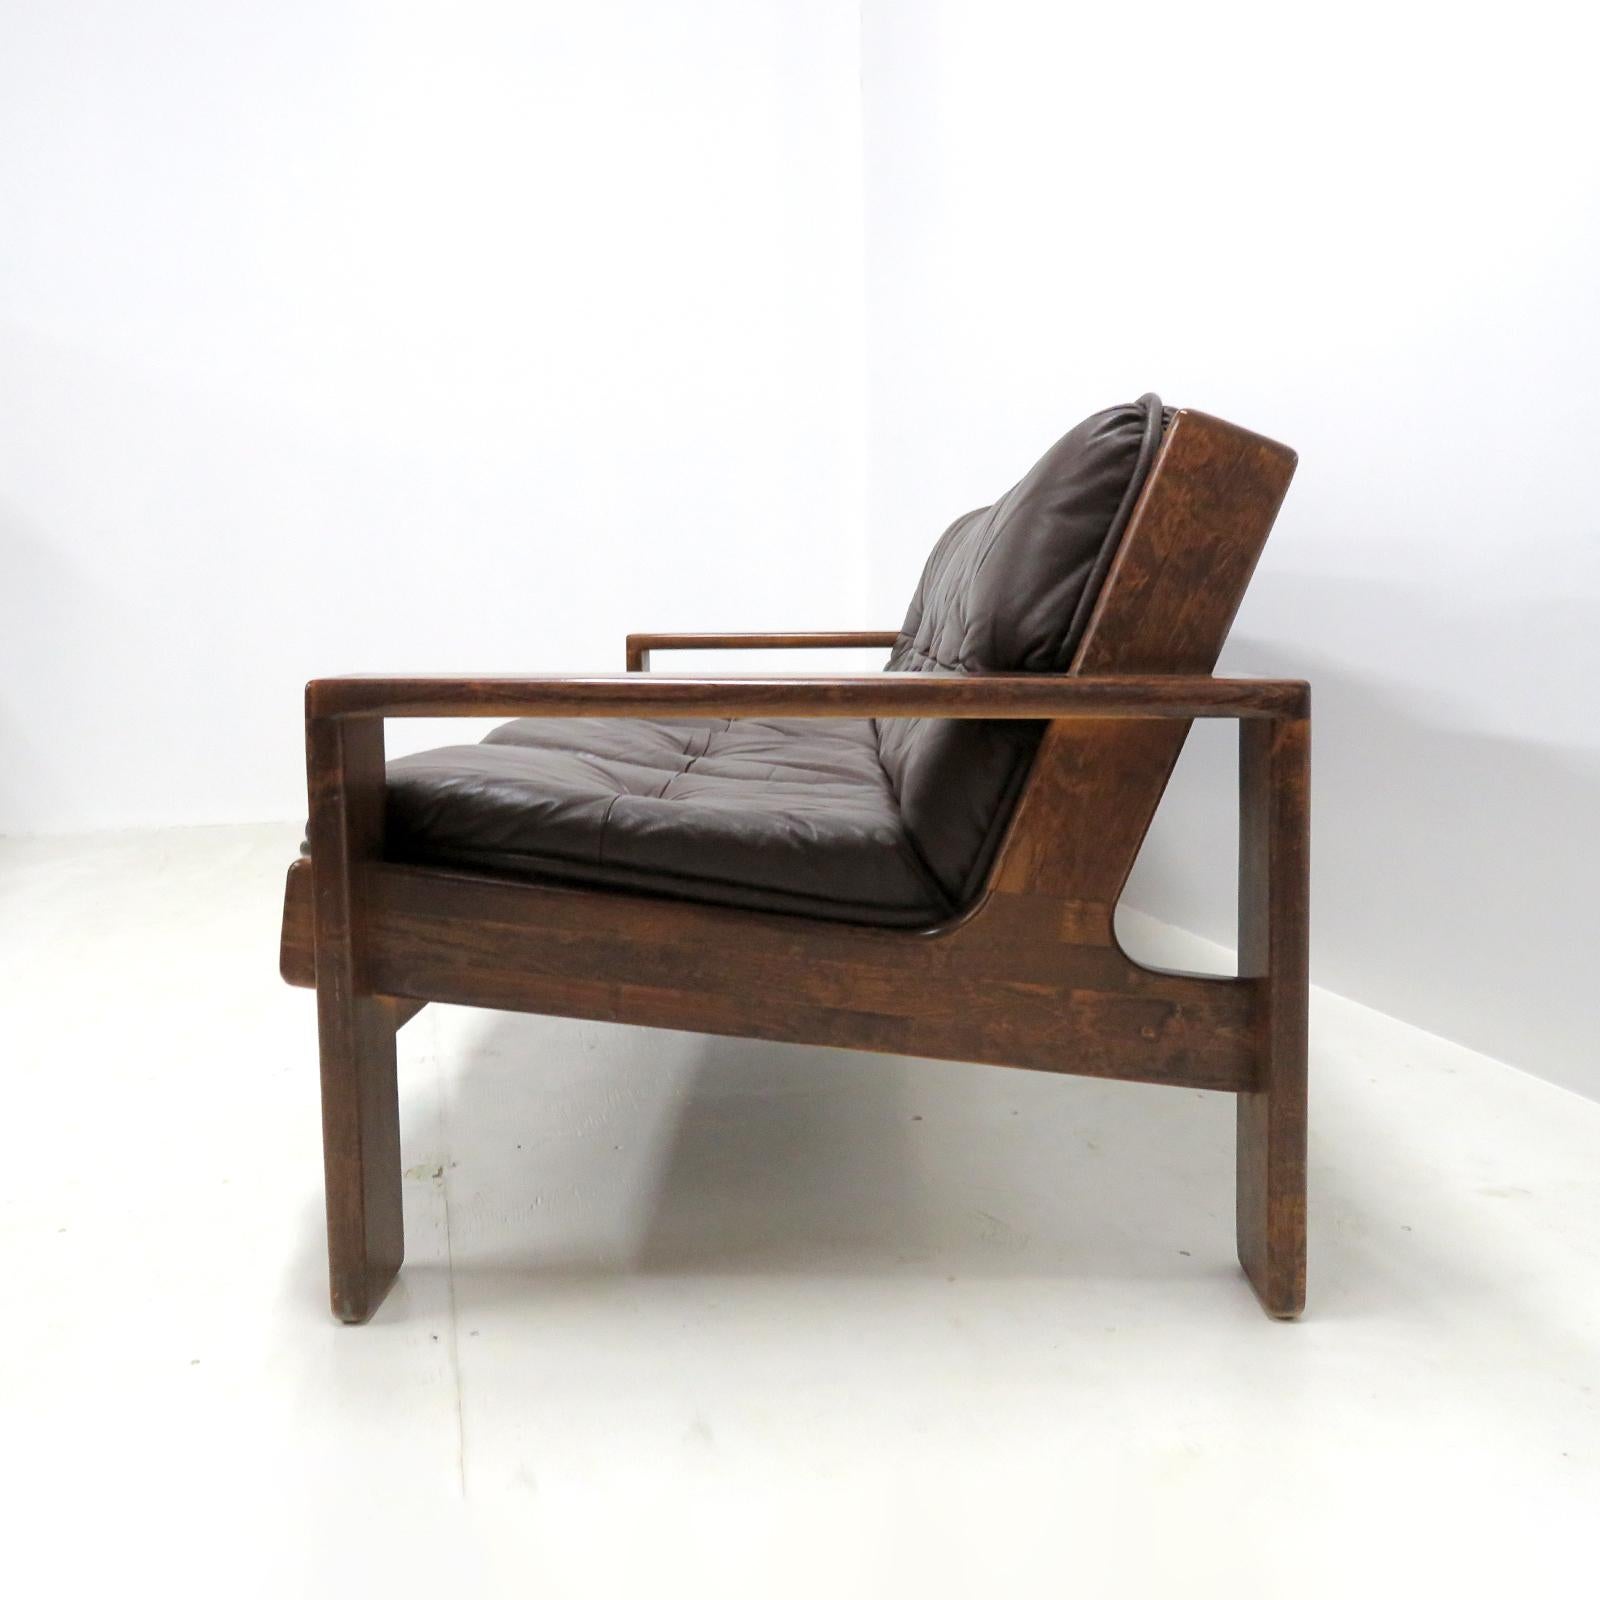 Stained Esko Pajamies 'Bonanza' Leather Sofa, 1970 For Sale